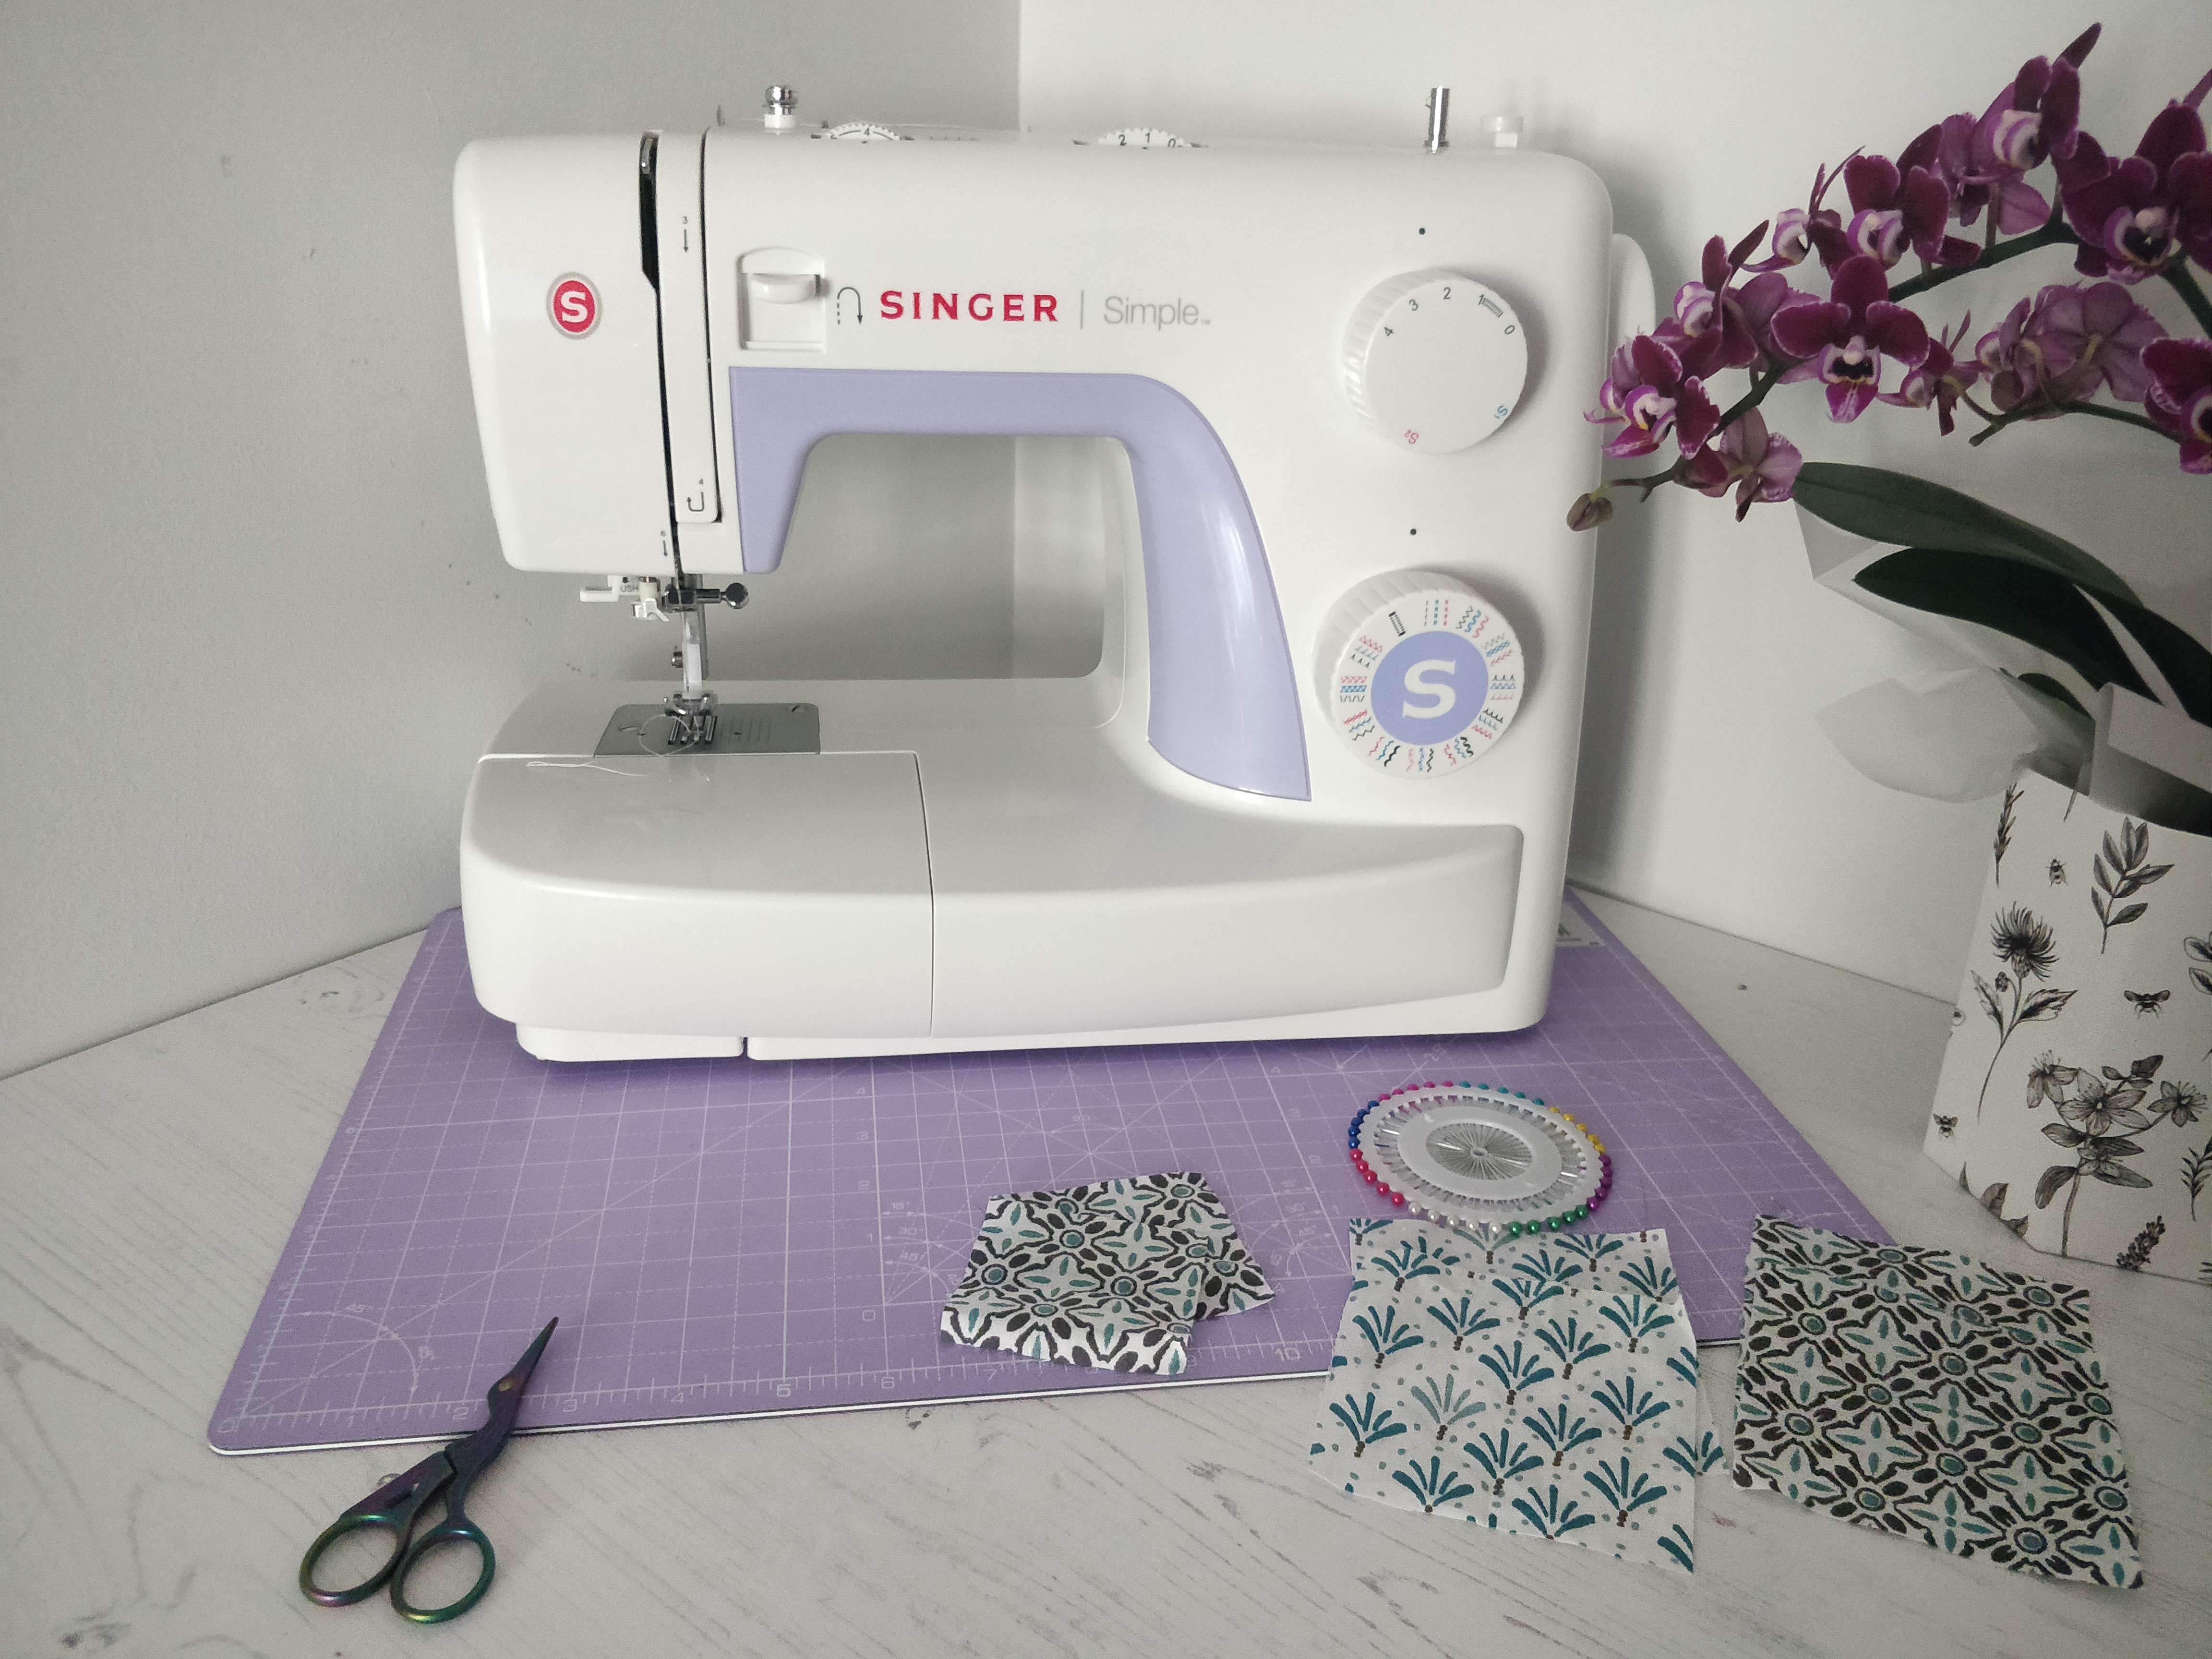 Singer 3232 Simple 32-Stitch Sewing Machine